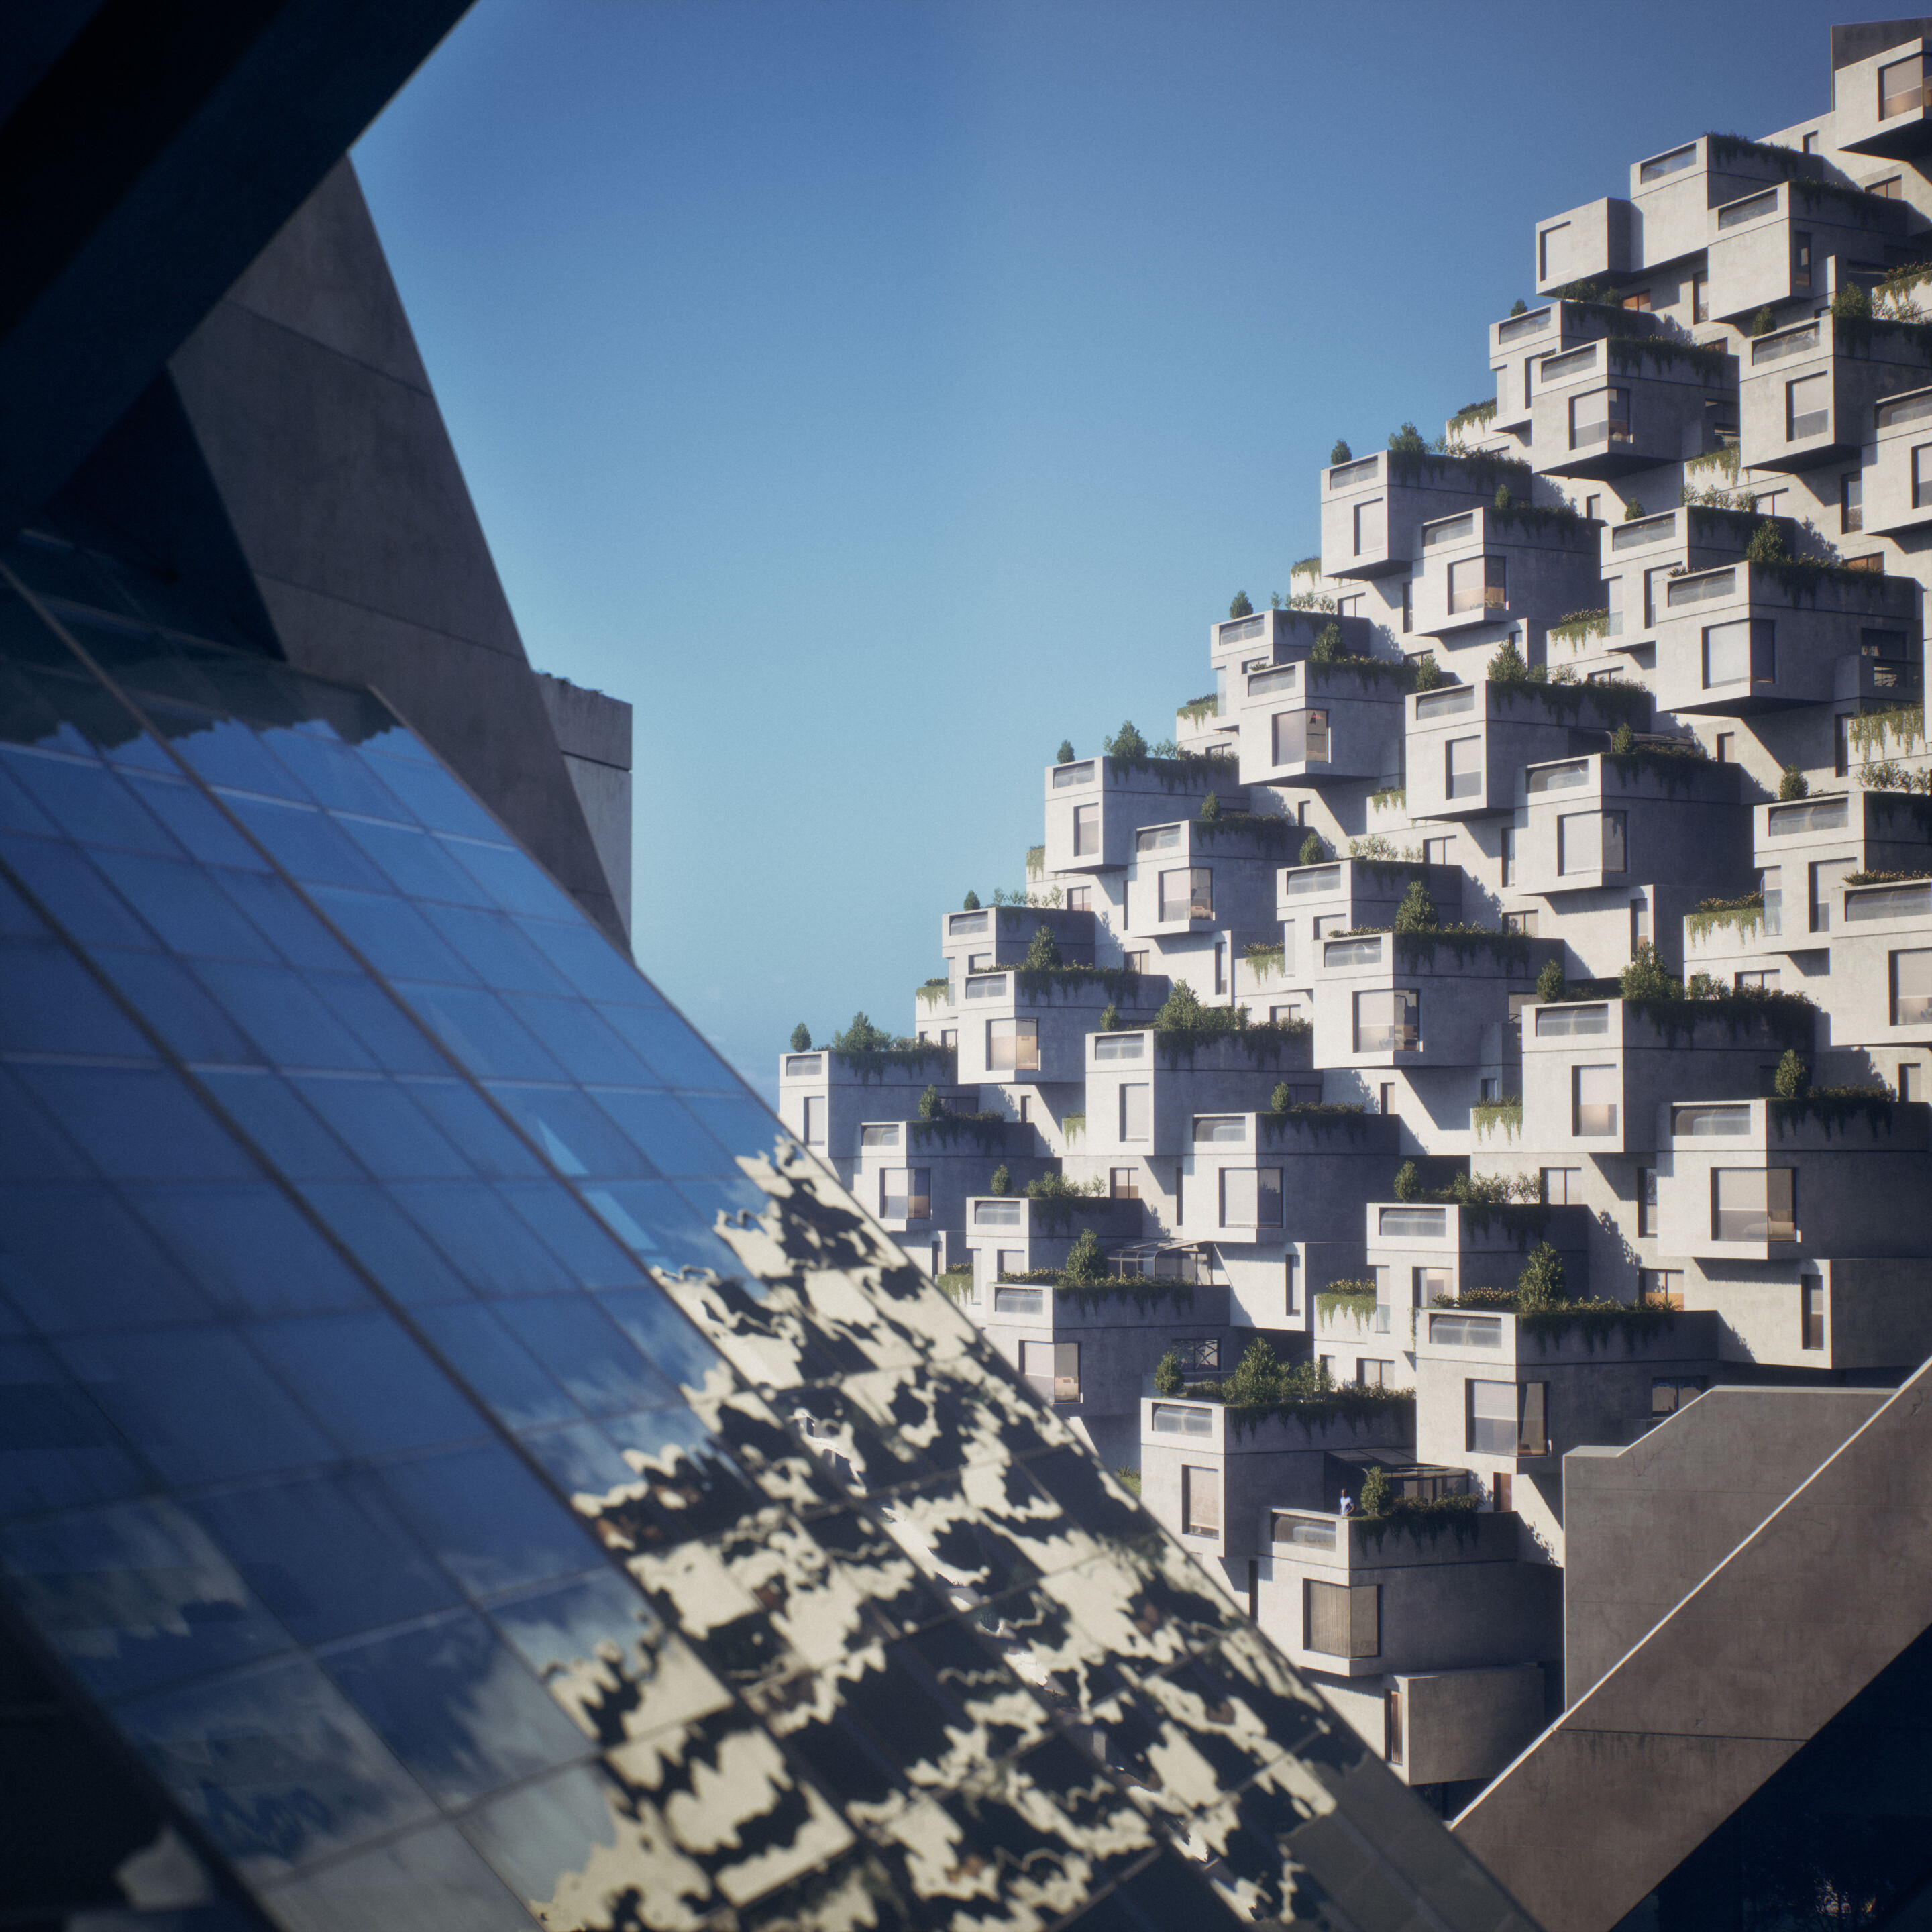 Digital model of a housing complex, exterior view